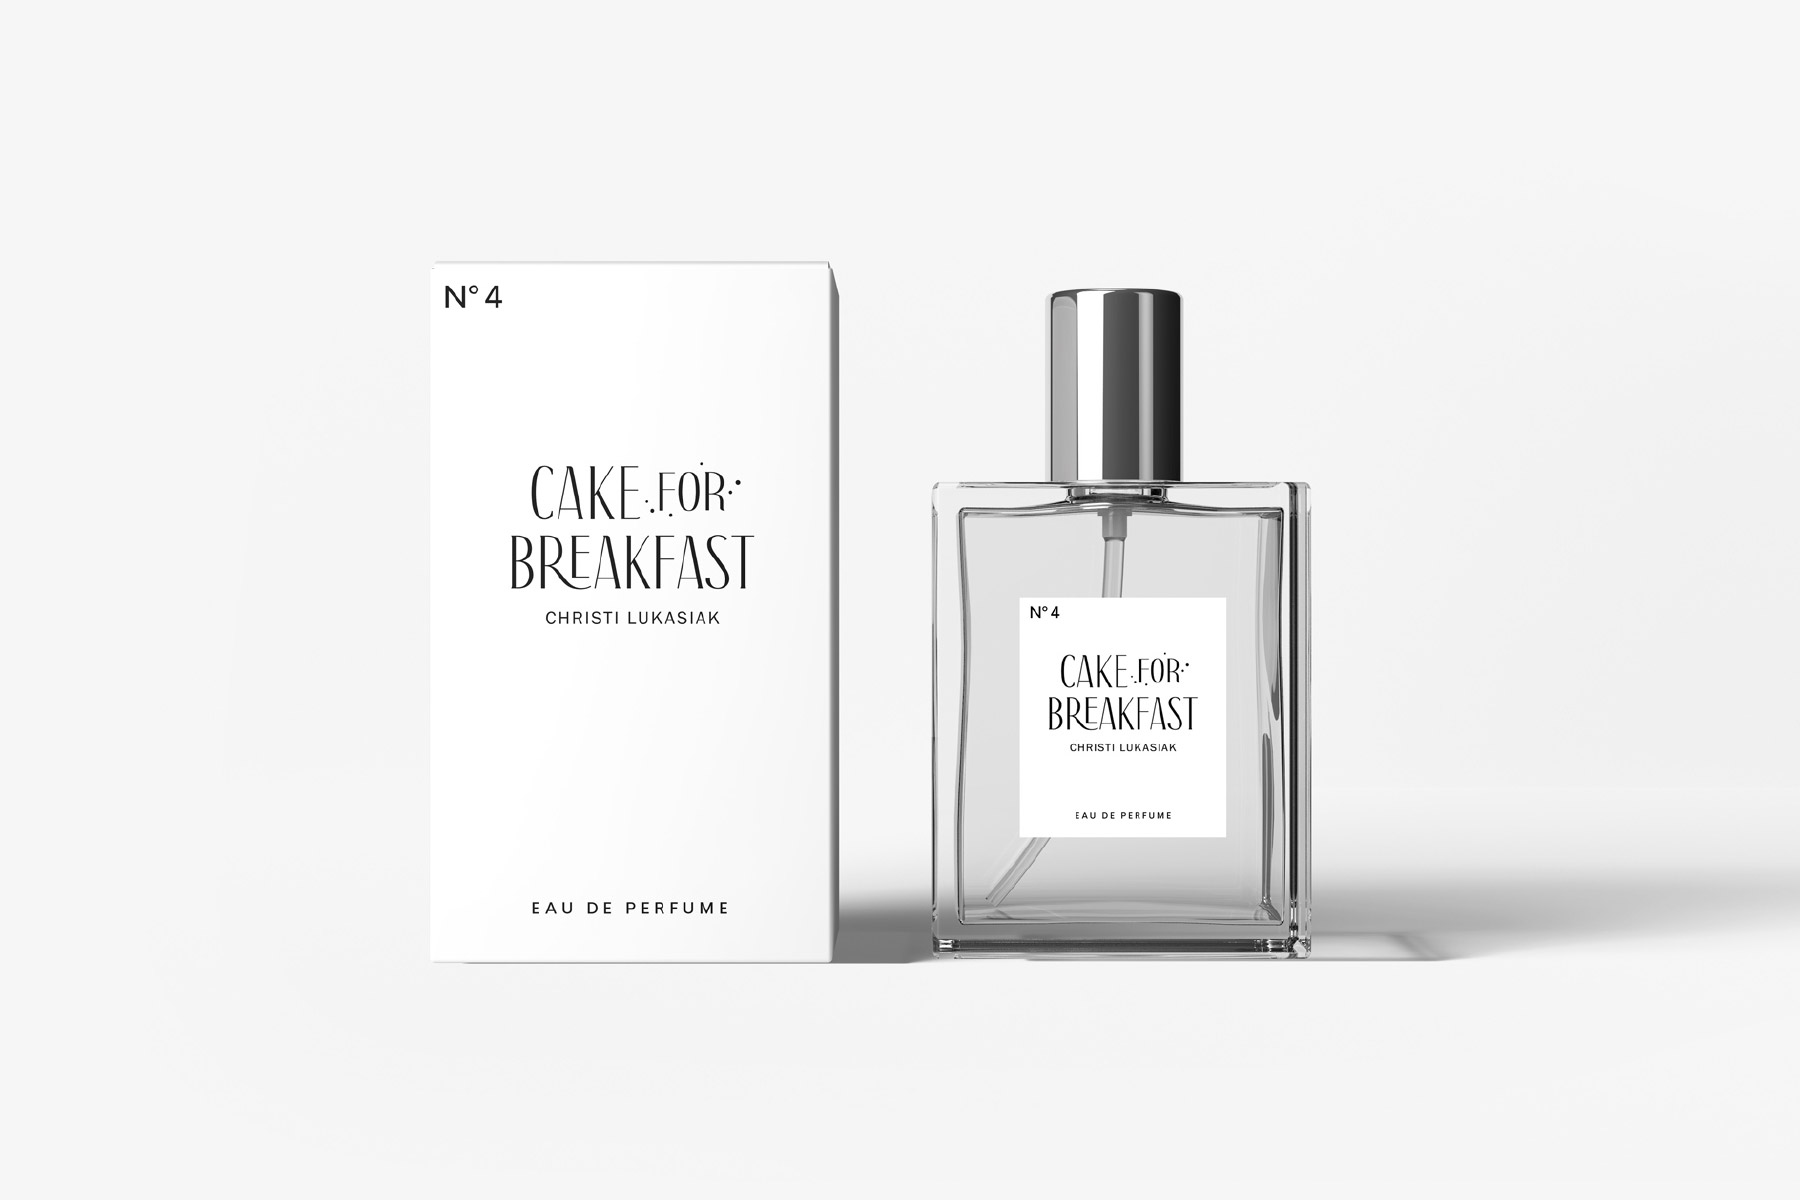 Cake for Breakfast logo on a luxury perfume bottle